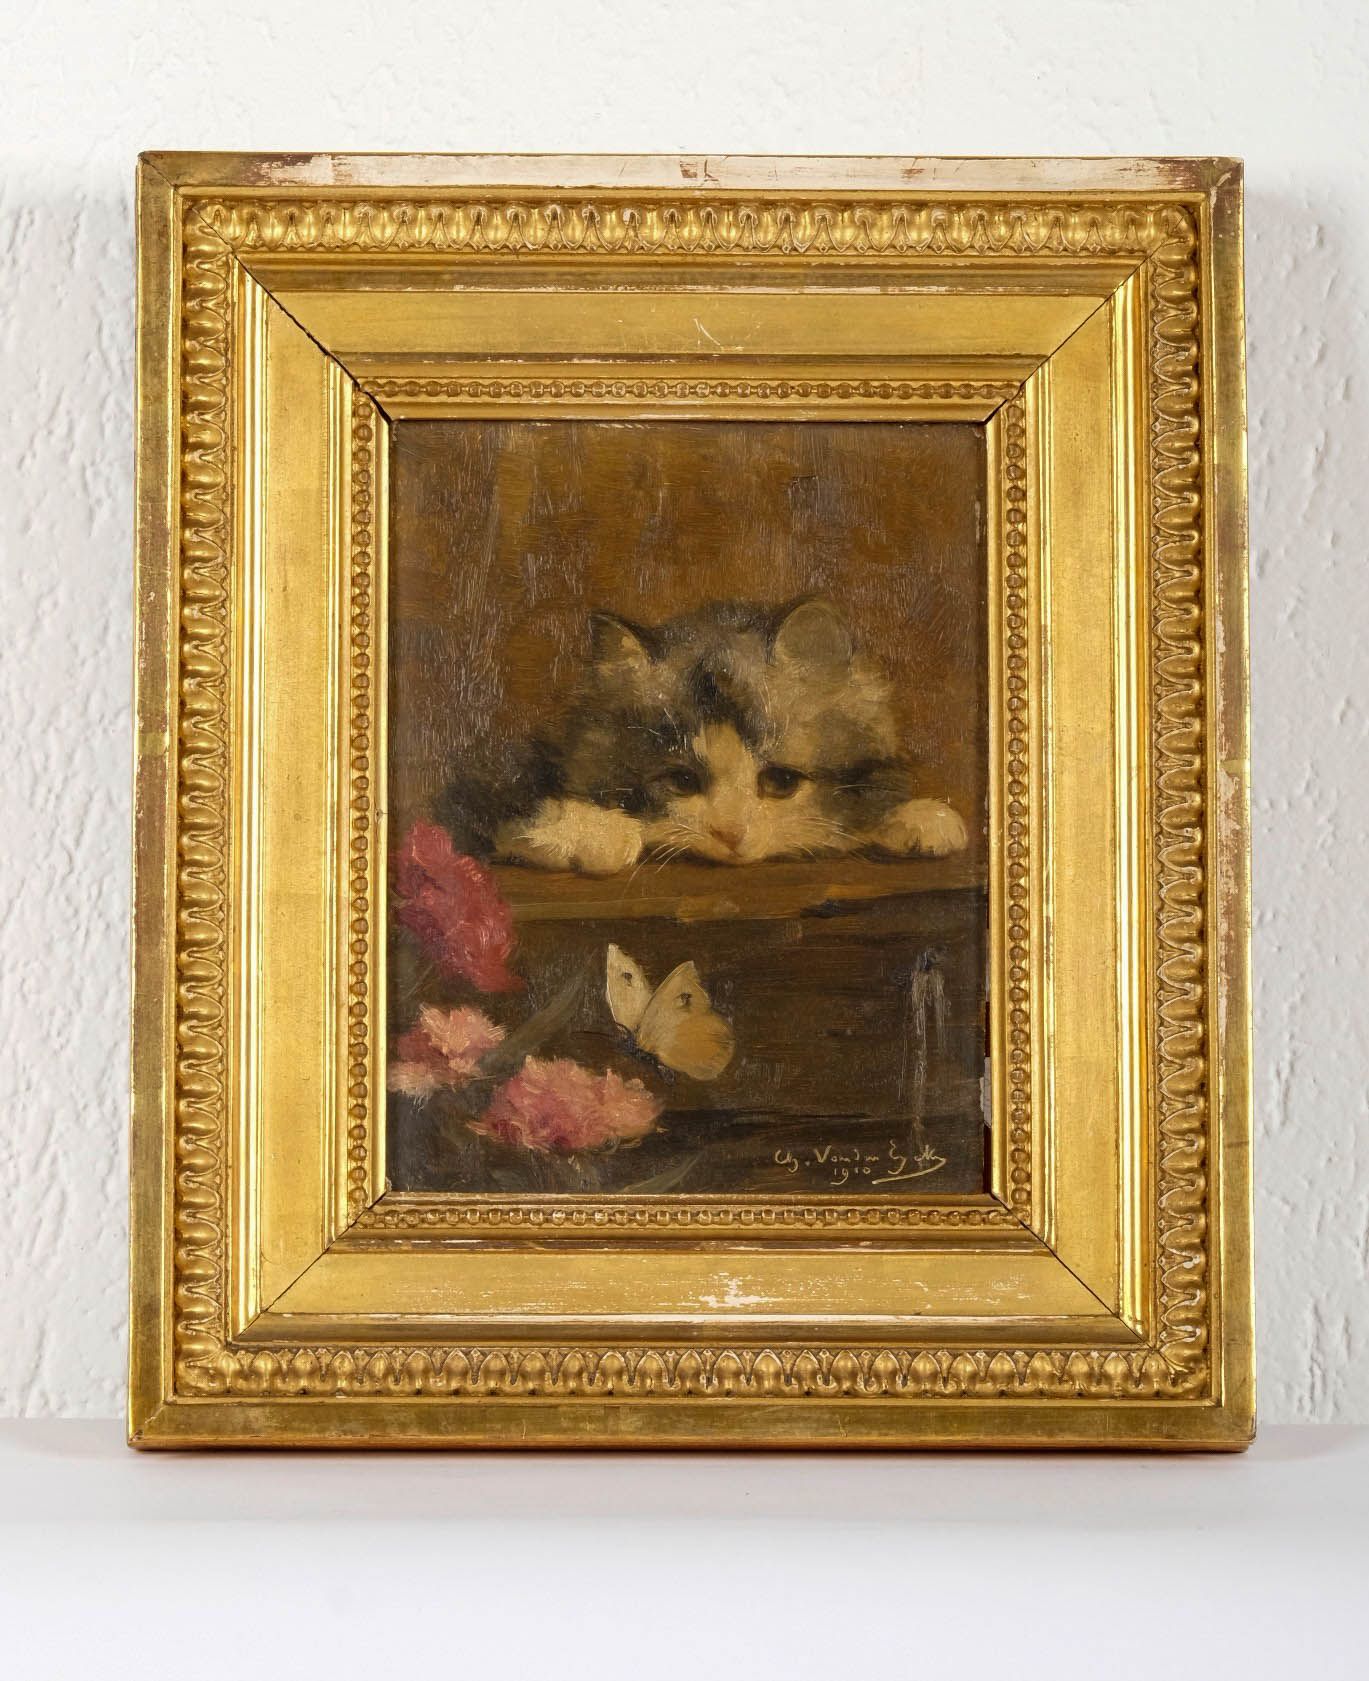 Charles II VAN DEN EYCKEN (1859-1923) 
Gattino, olio su tavola, firmato e datato&hellip;